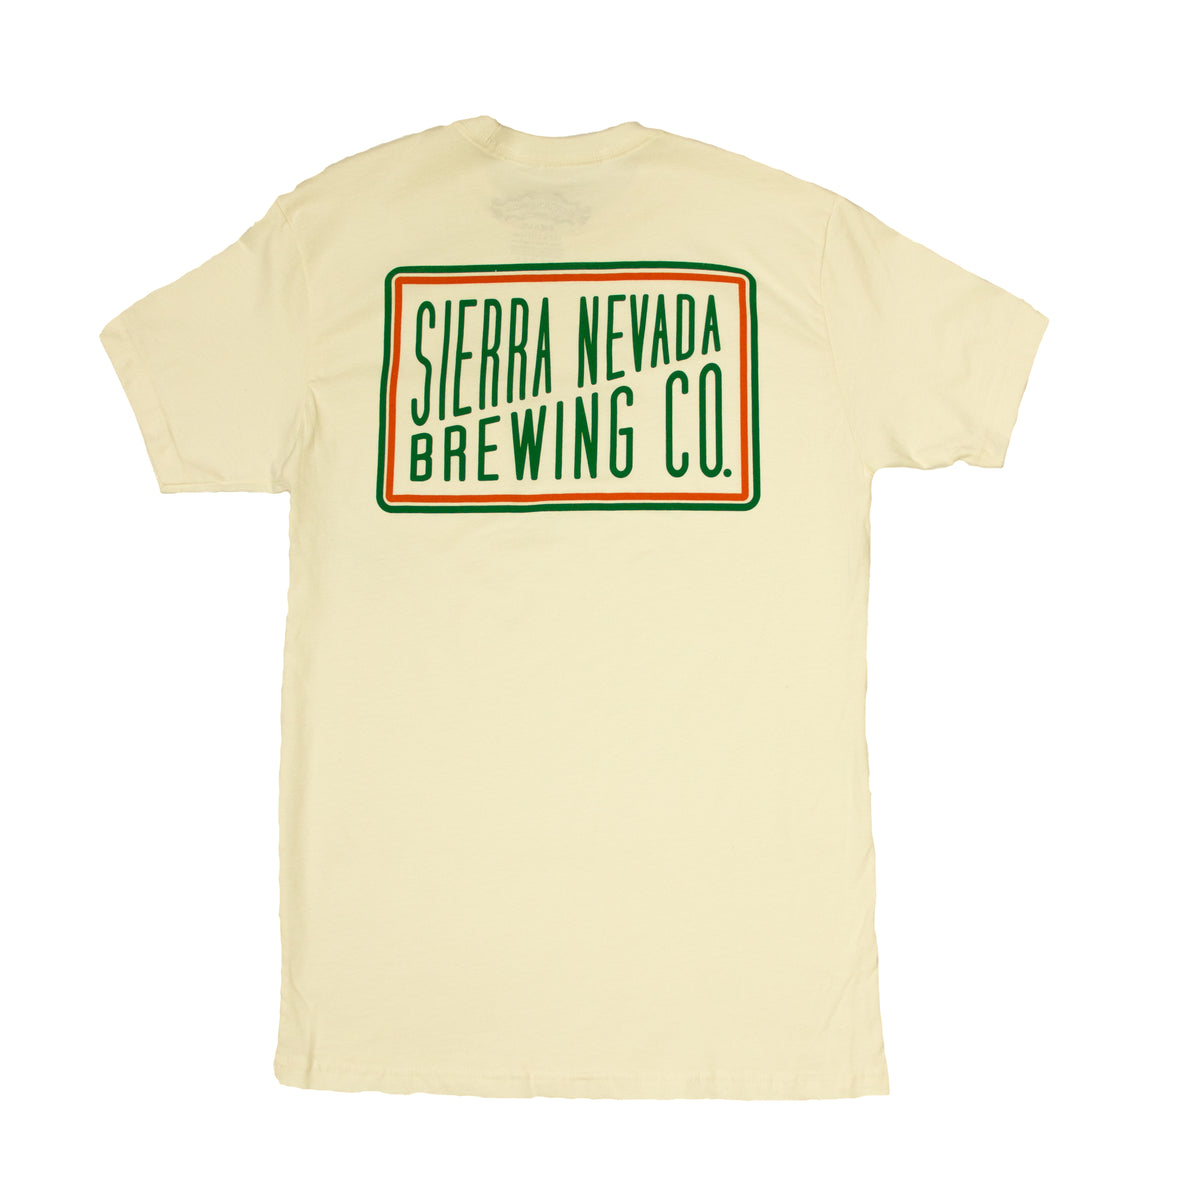 snbc pocket tee back with sierra nevada brewing logo